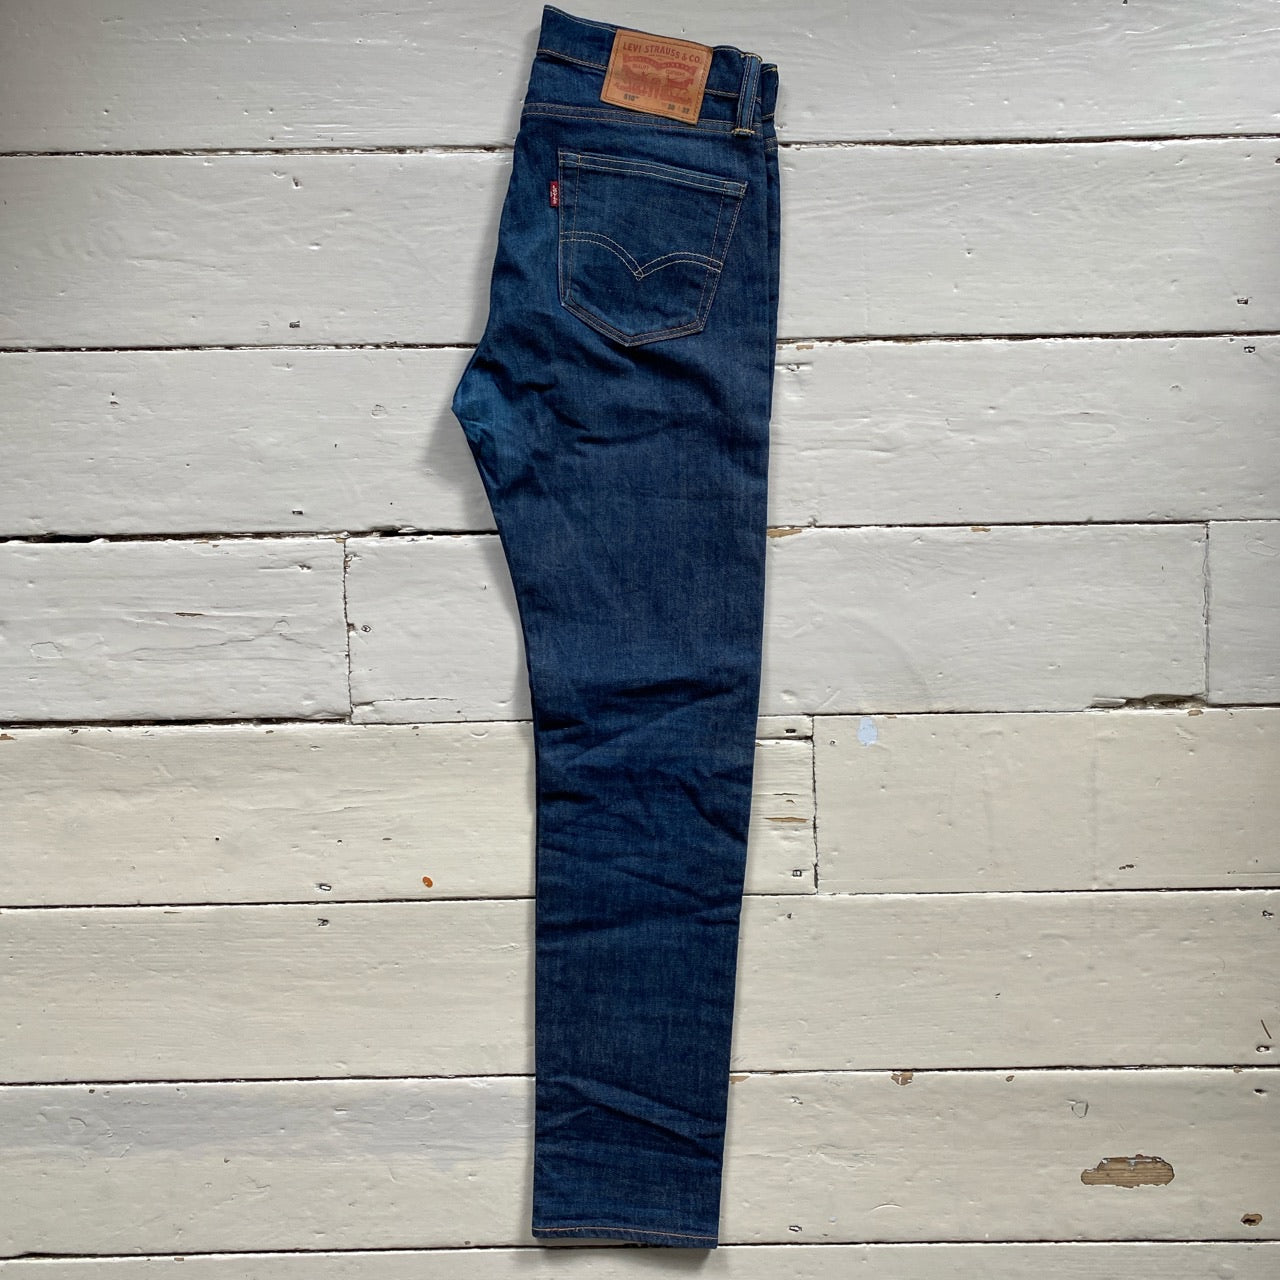 Levis 510 Slim Navy Jeans (30/30)